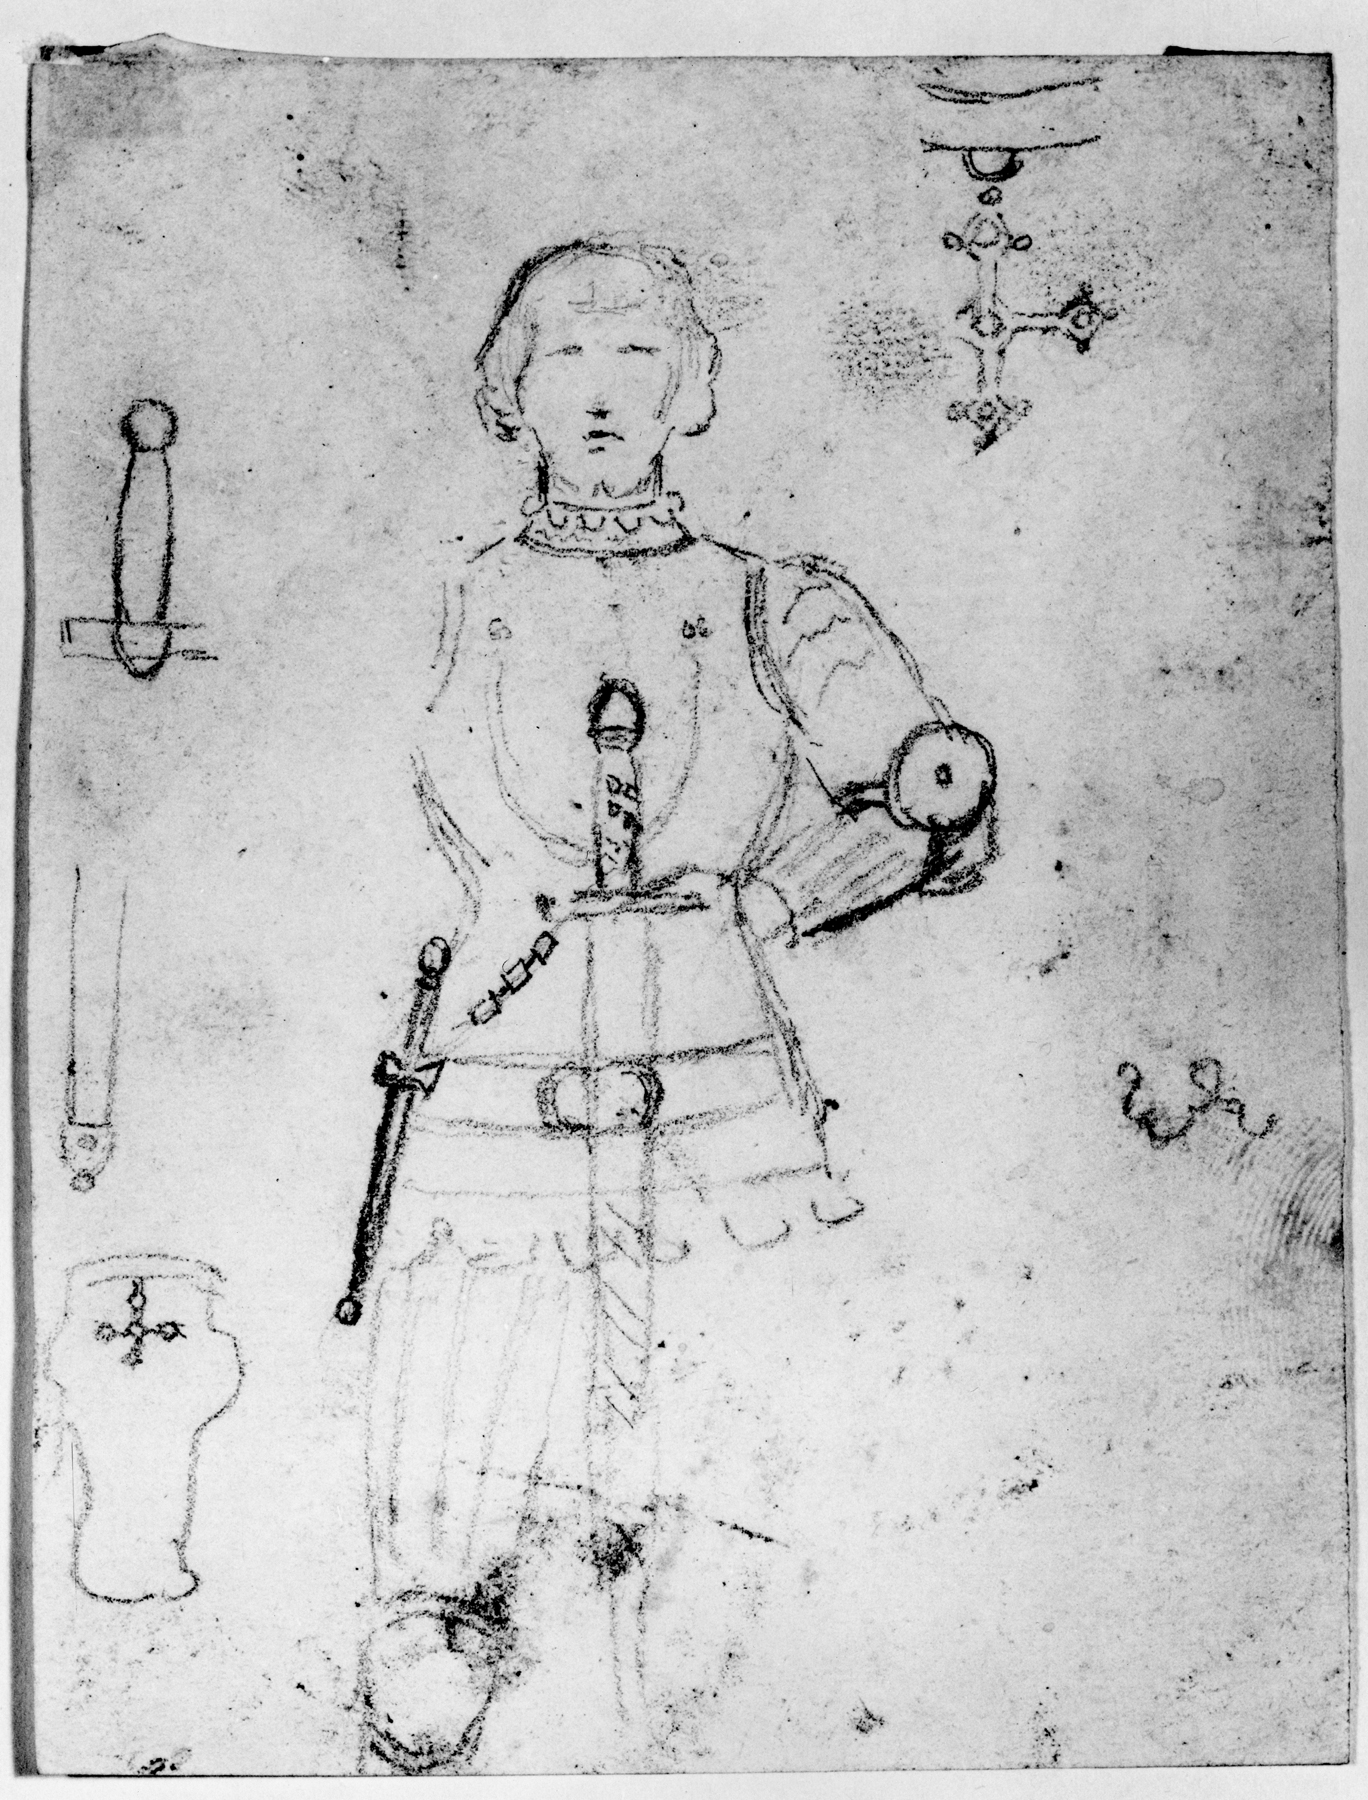 Image for Studies of man in medieval armor/swords